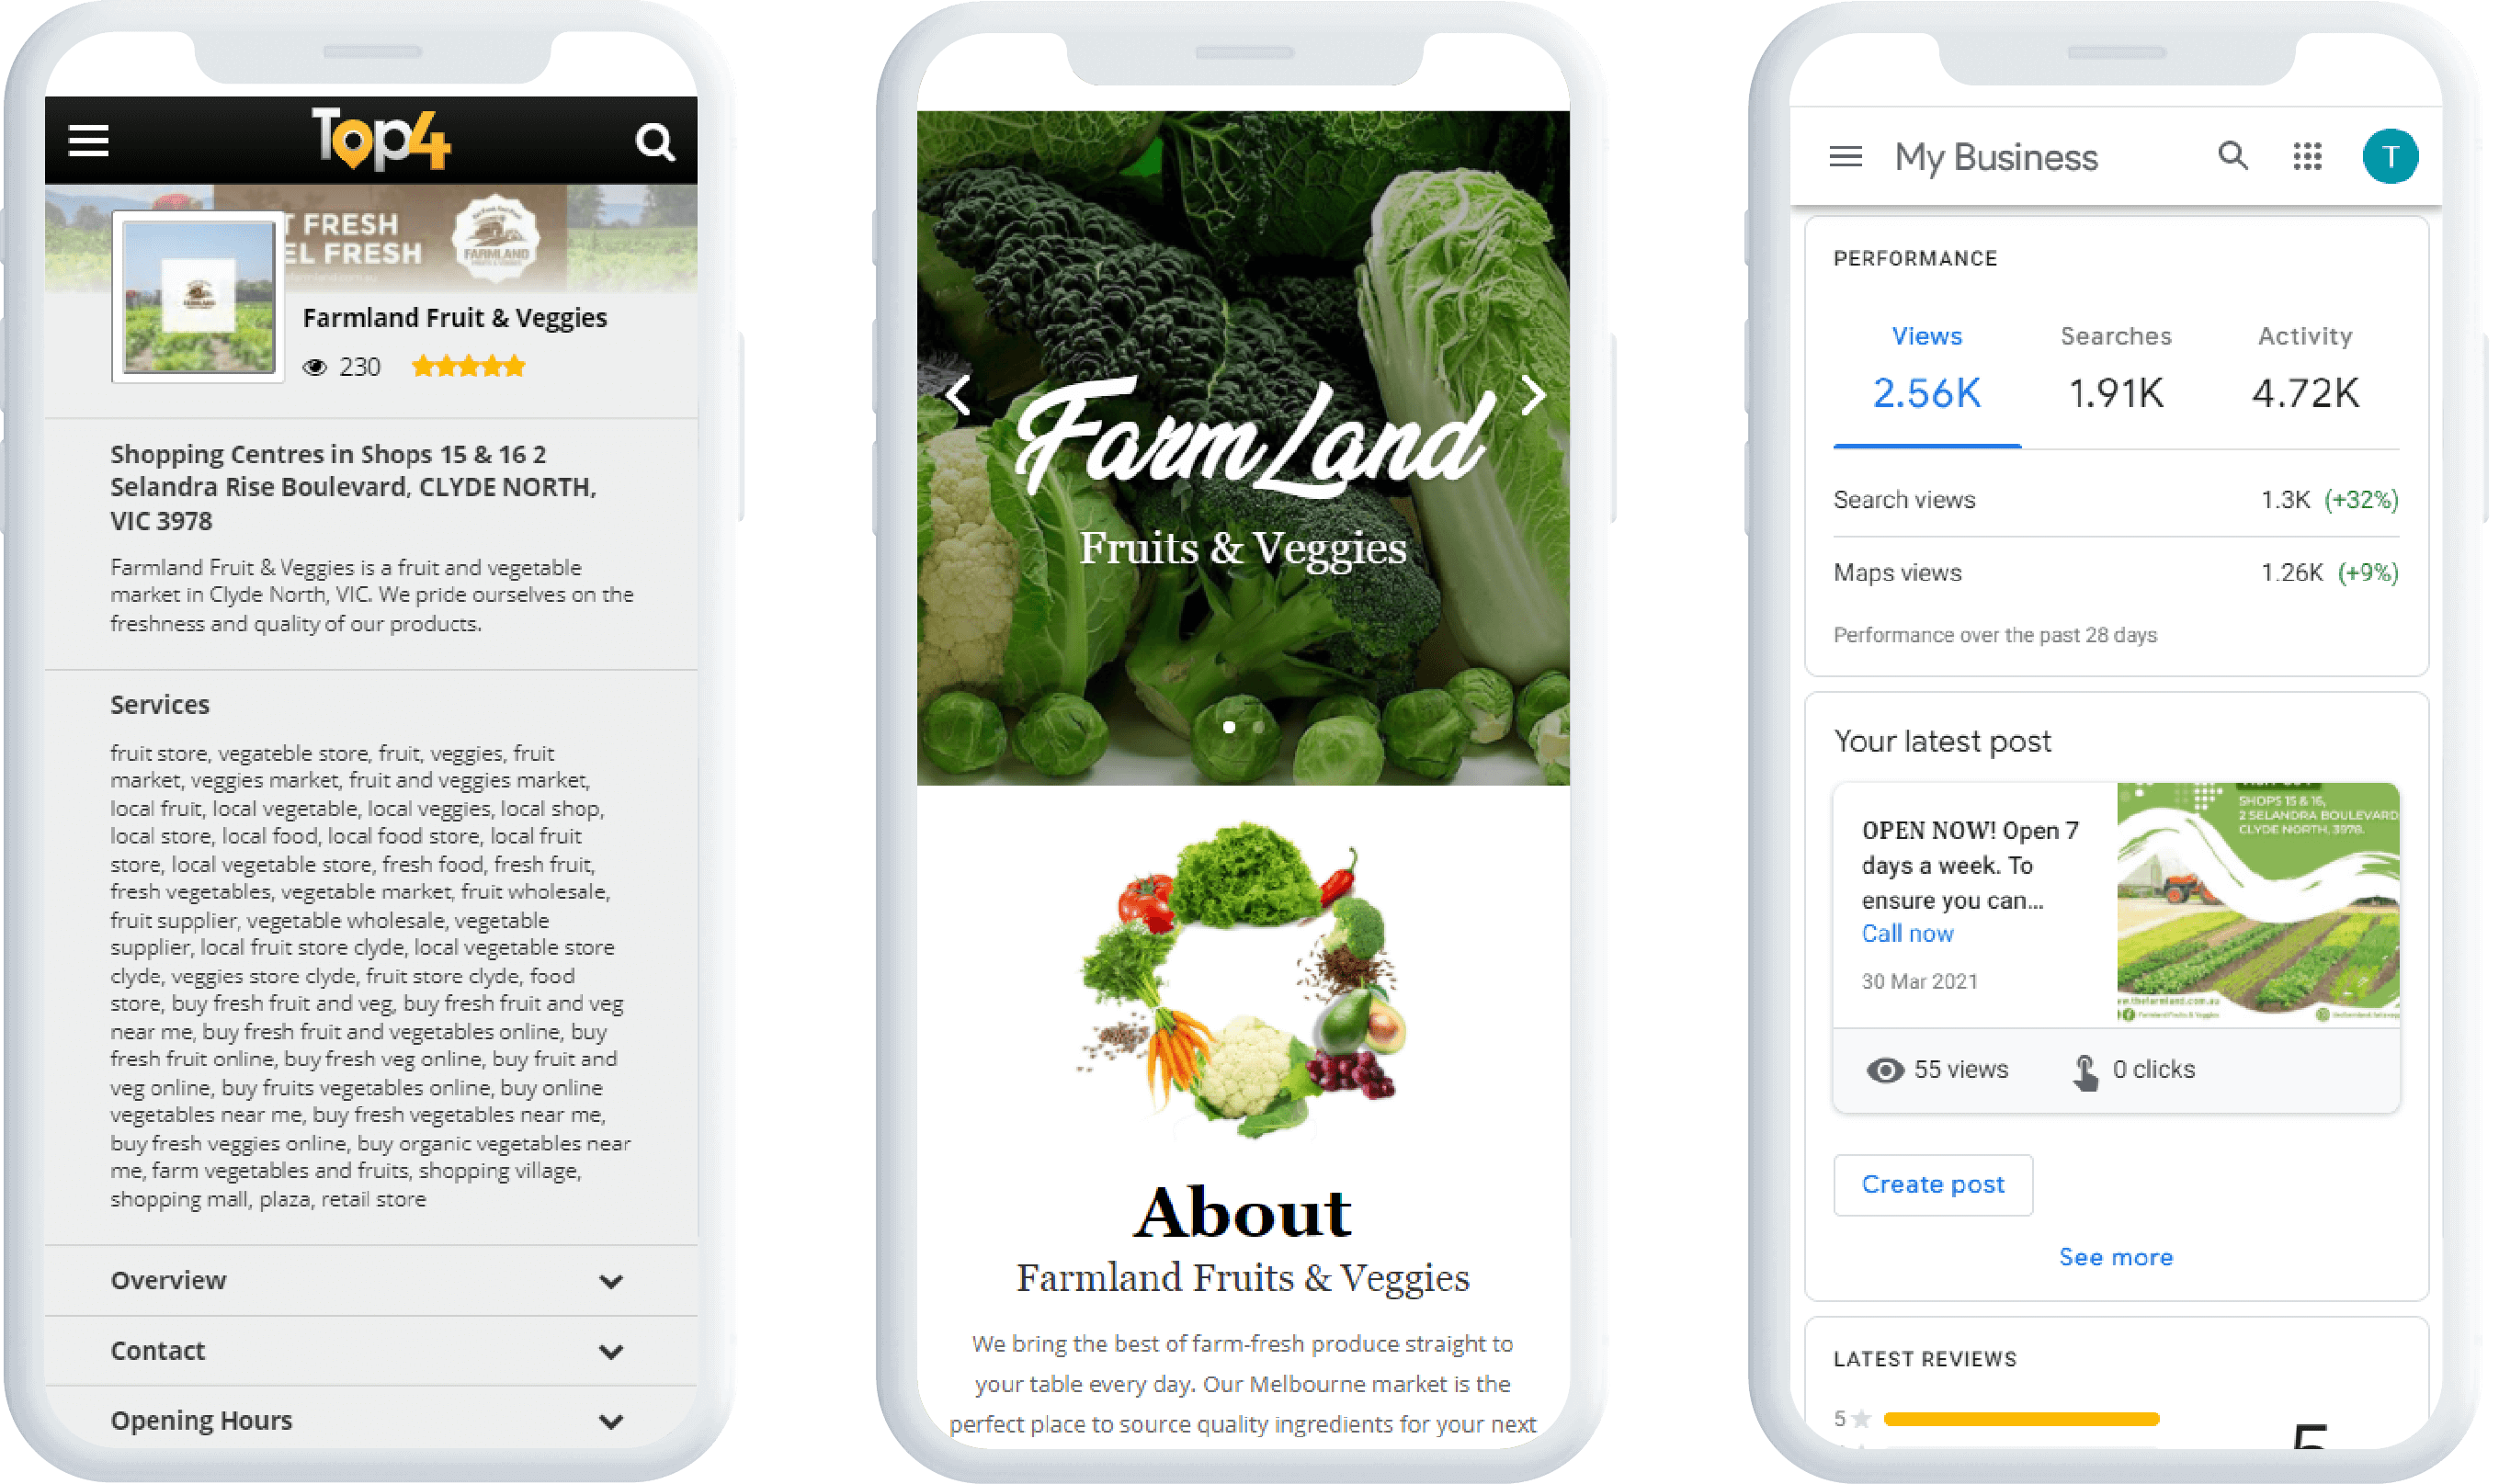 Farmland Fruit and Veggies - Digital Marketing Case Study - Top4 Marketing